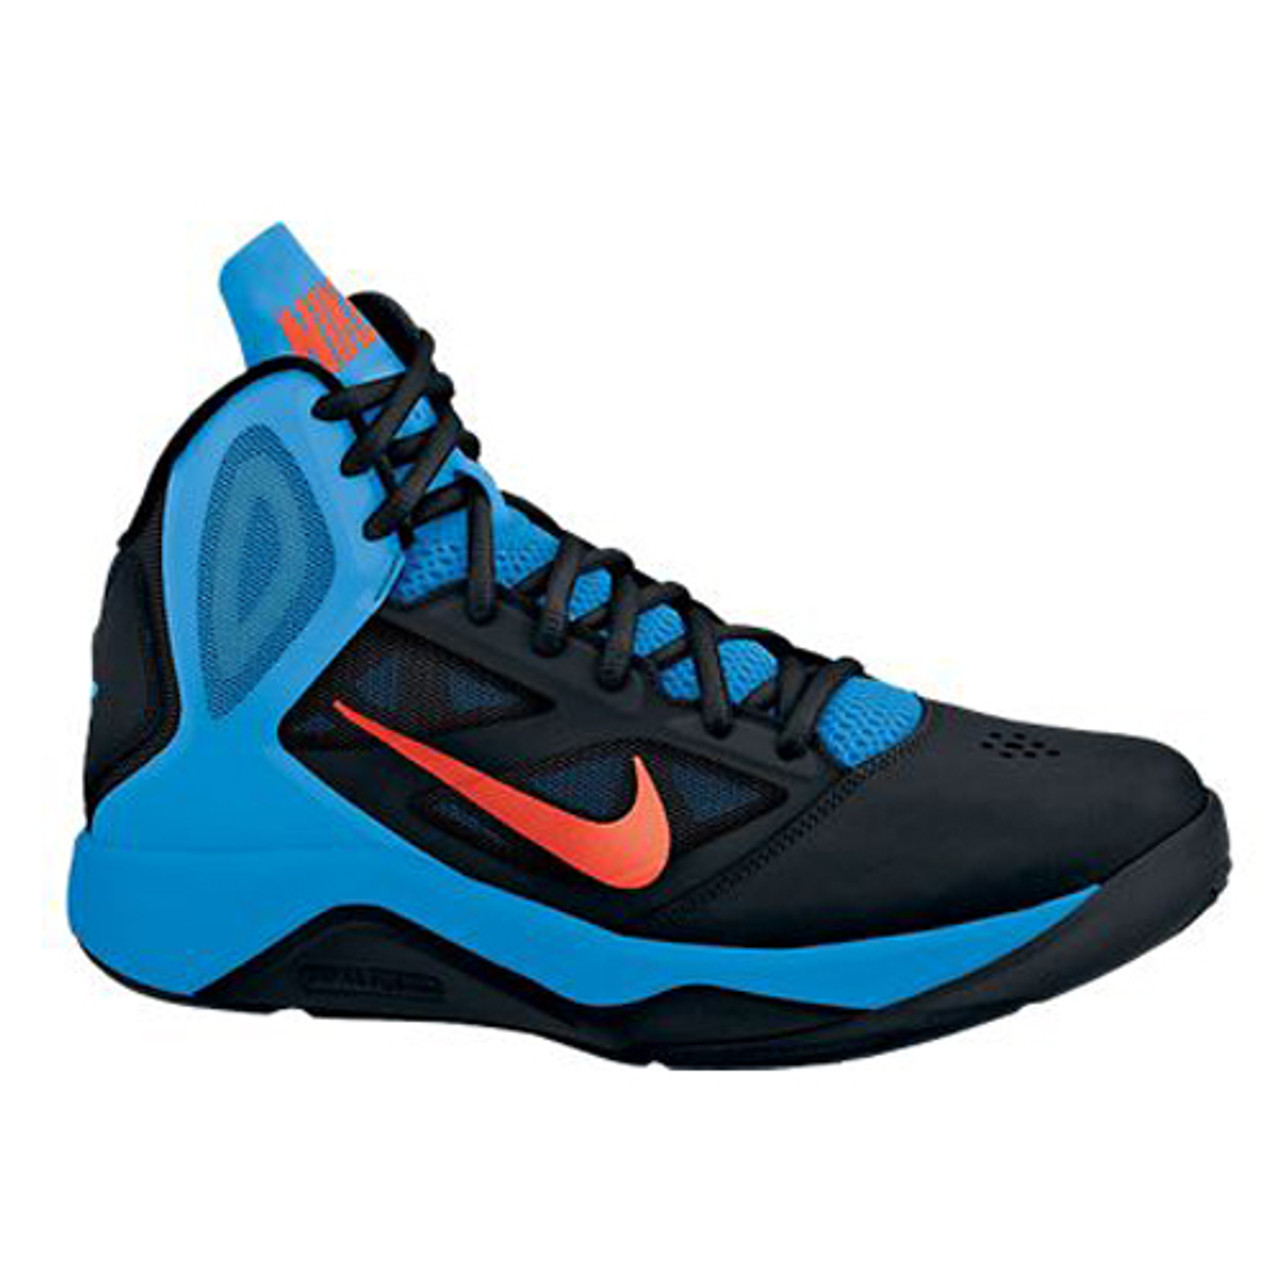 Nike Dual Fusion BB II Black/Blue/Orange Basketball Shoes - Black/Photo Blue/Team Discount Nike Men's Athletic & More - Shoolu.com | Shoolu.com